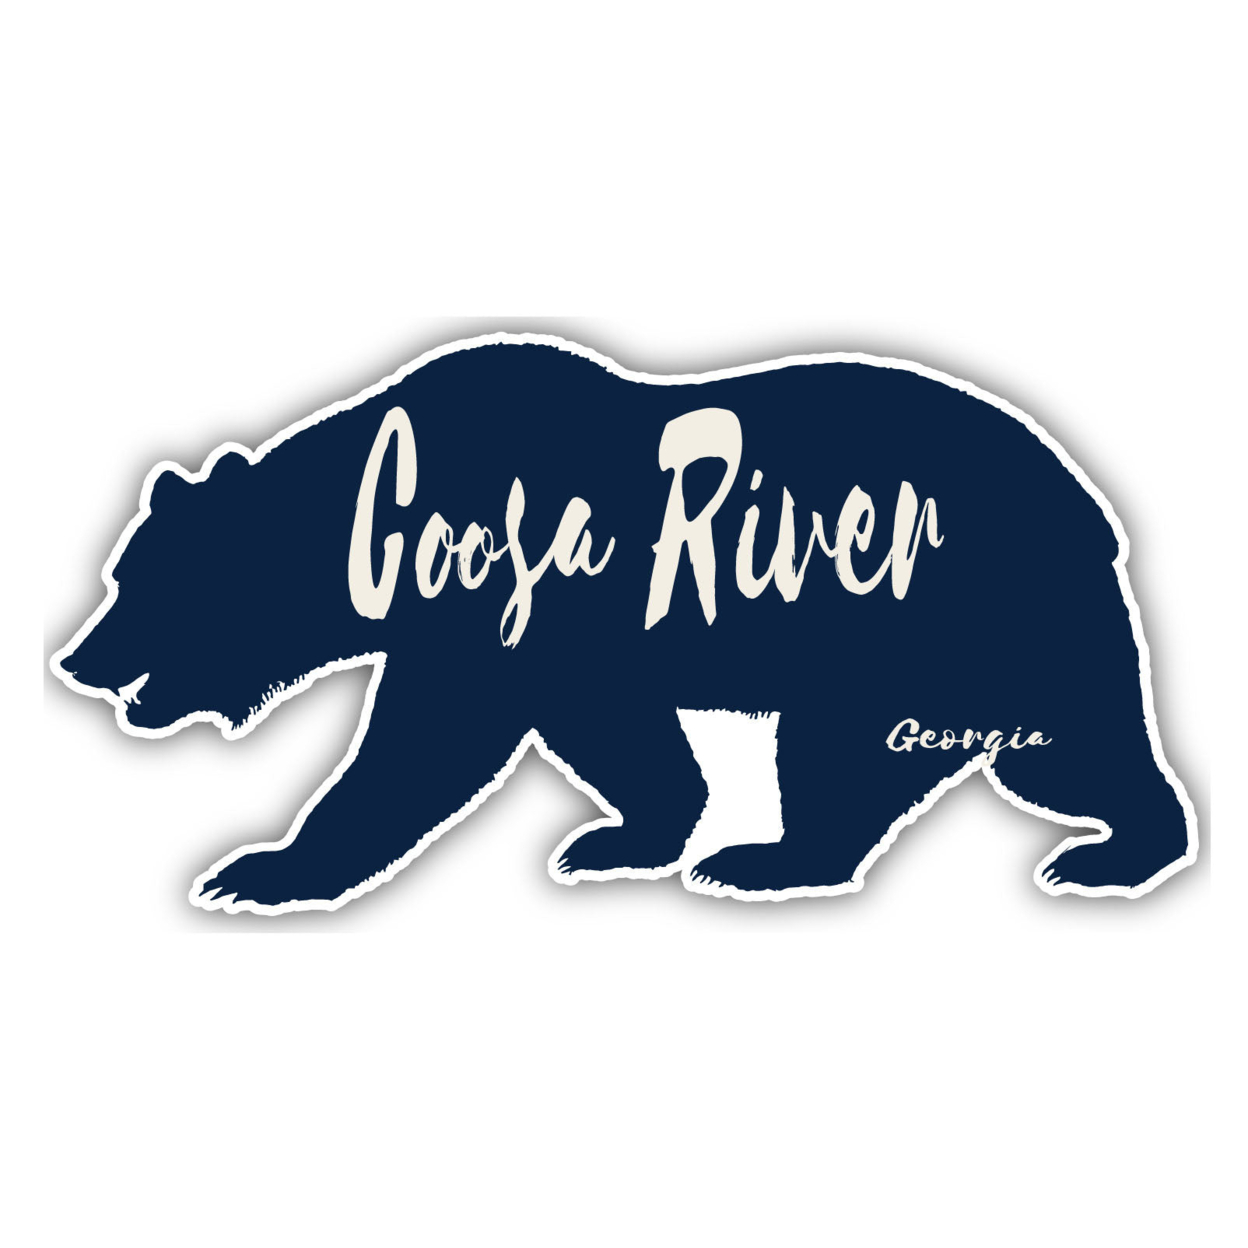 Coosa River Georgia Souvenir Decorative Stickers (Choose Theme And Size) - Single Unit, 4-Inch, Bear